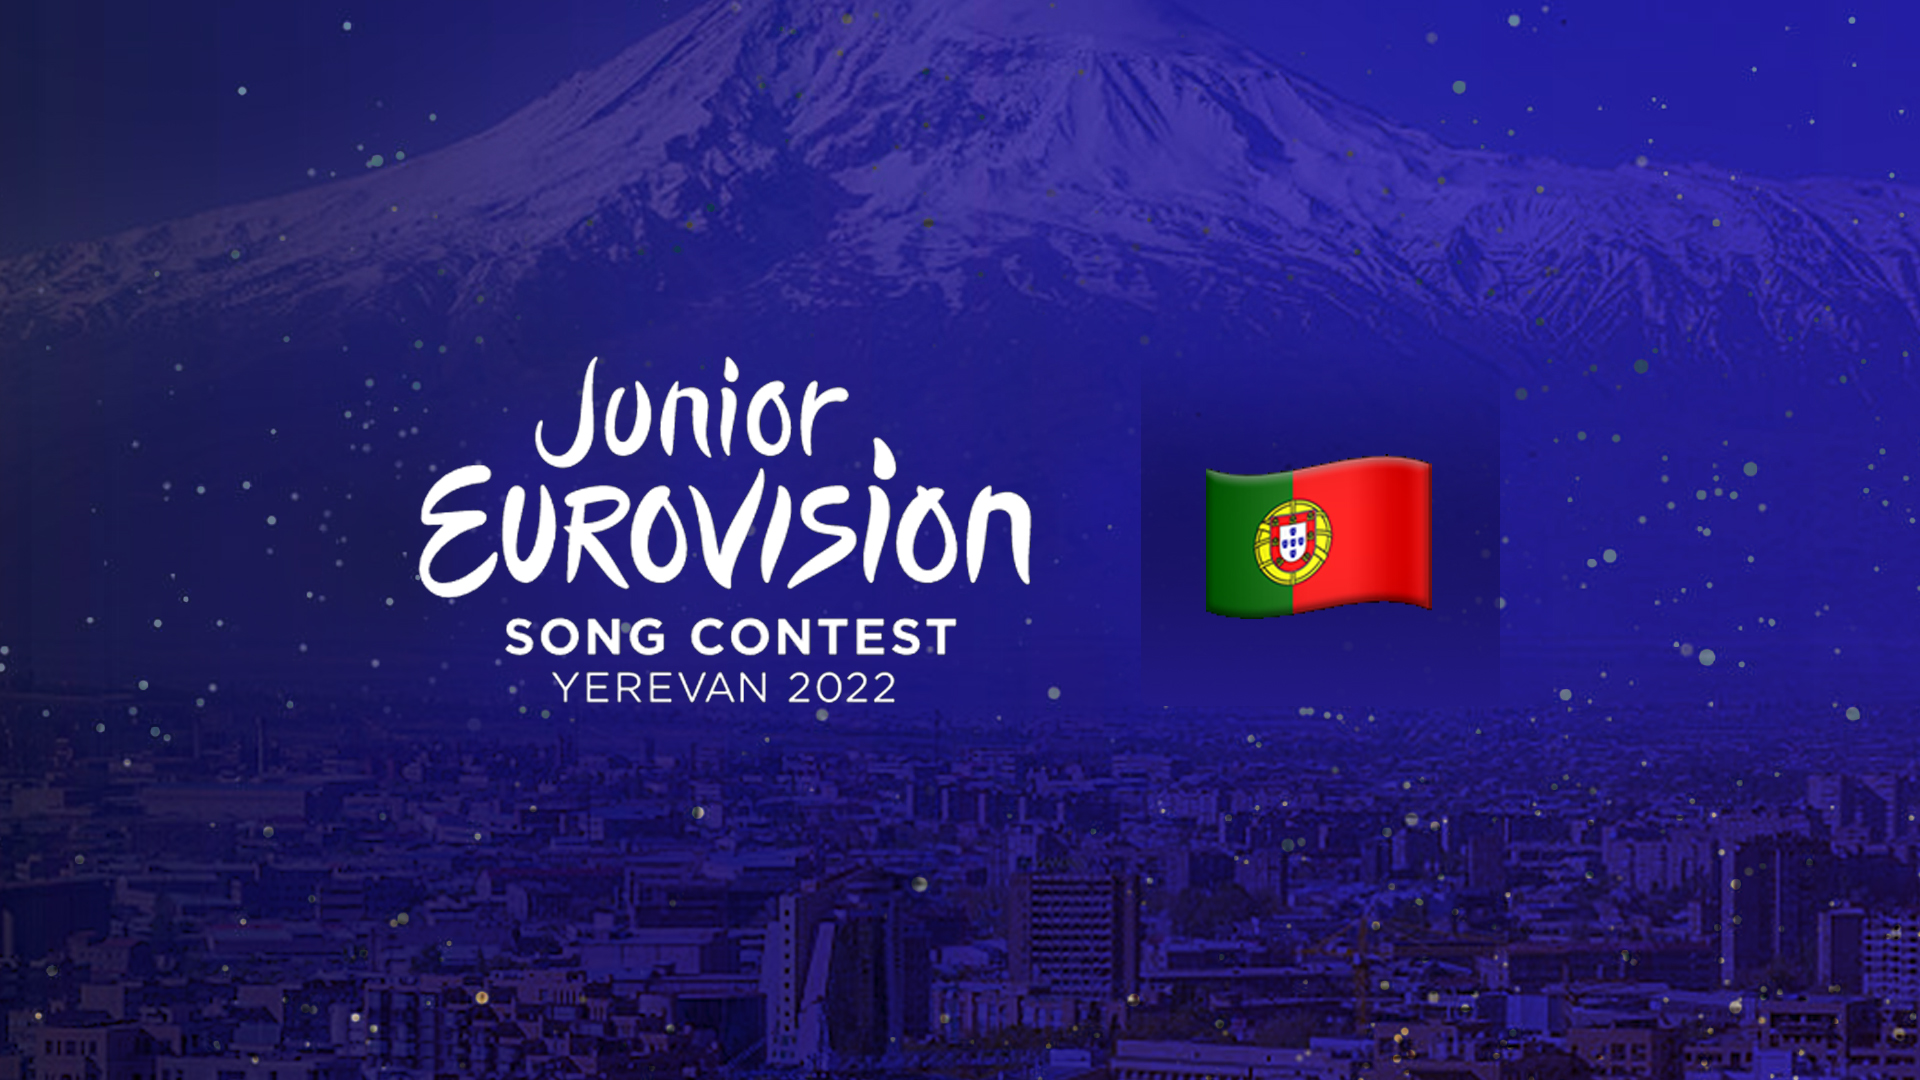 https://media.rtp.pt/festivaldacancao/wp-content/uploads/sites/98/2022/08/Portugal-oficializa-participacao-no-Junior-Eurovision-Song-Contest-2022.jpg